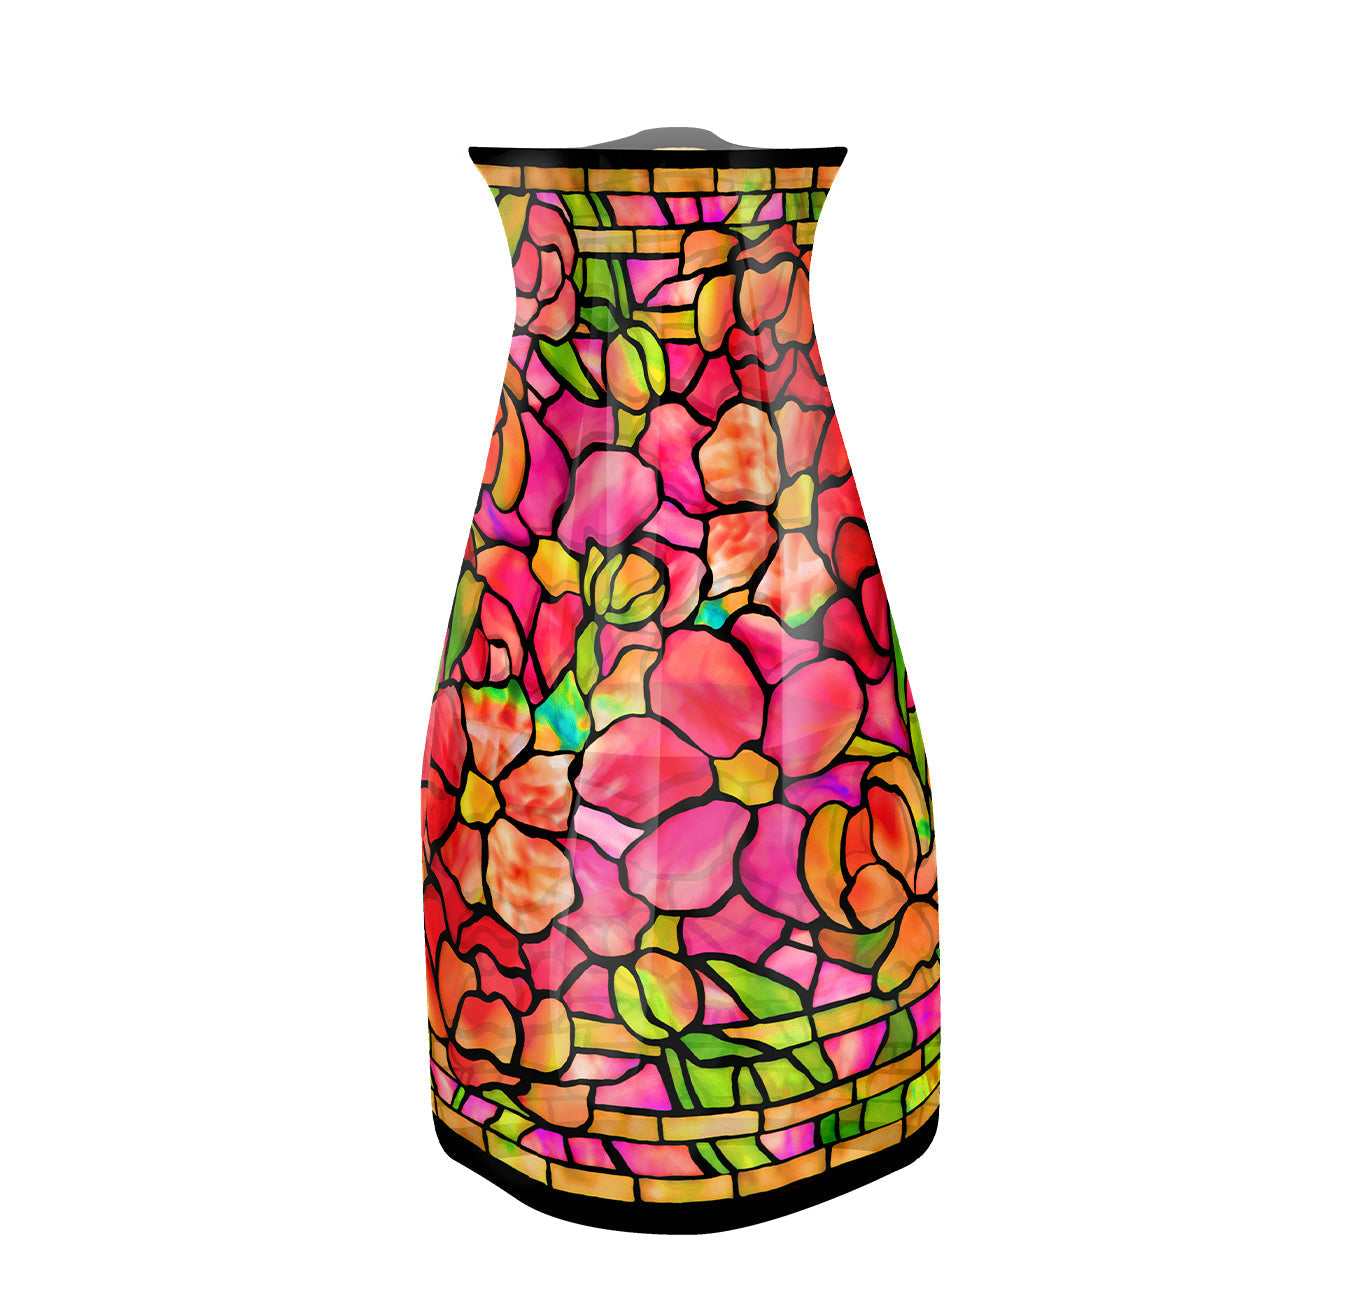 Tiffany „Pink Peonies“ Erweiterbare Vase